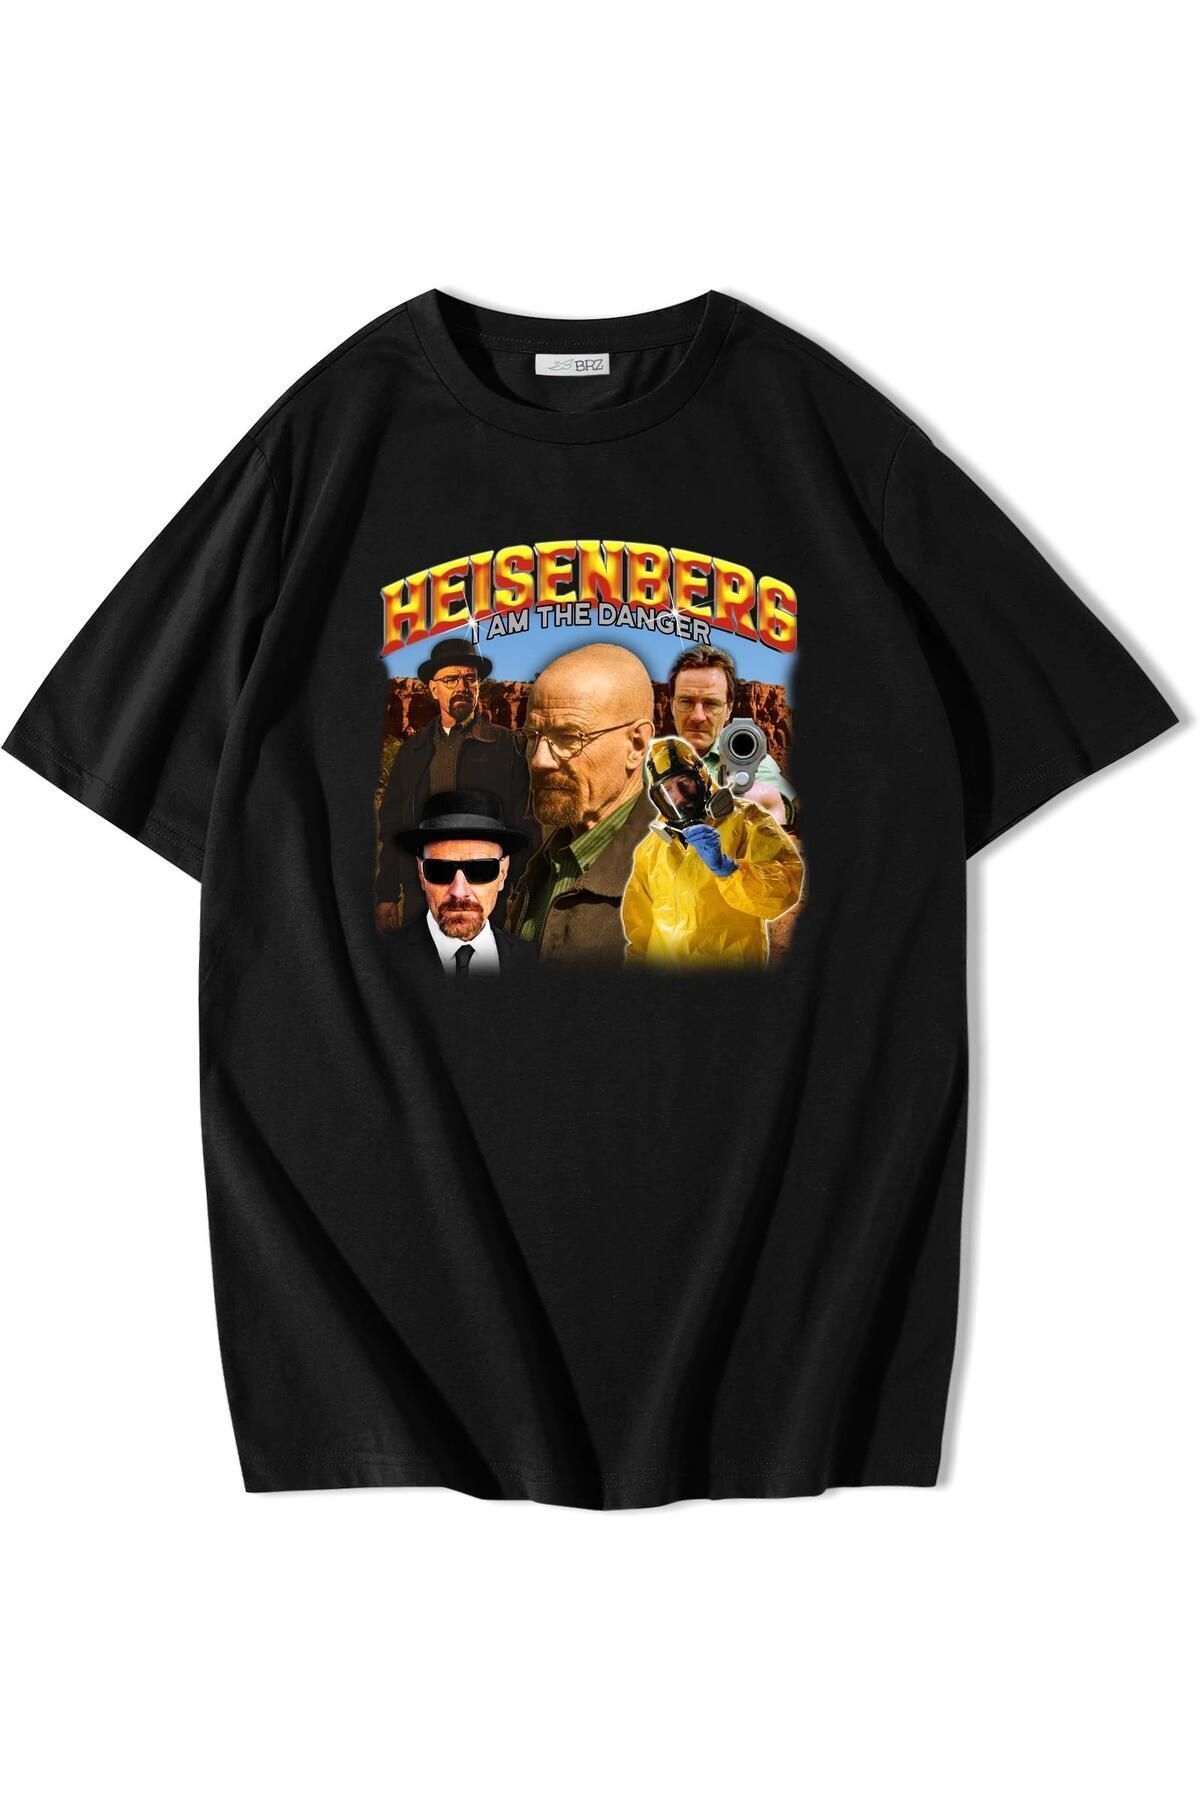 BRZ COLLECTION Unisex Oversize Heisenberg I Am The Danger T-shirt